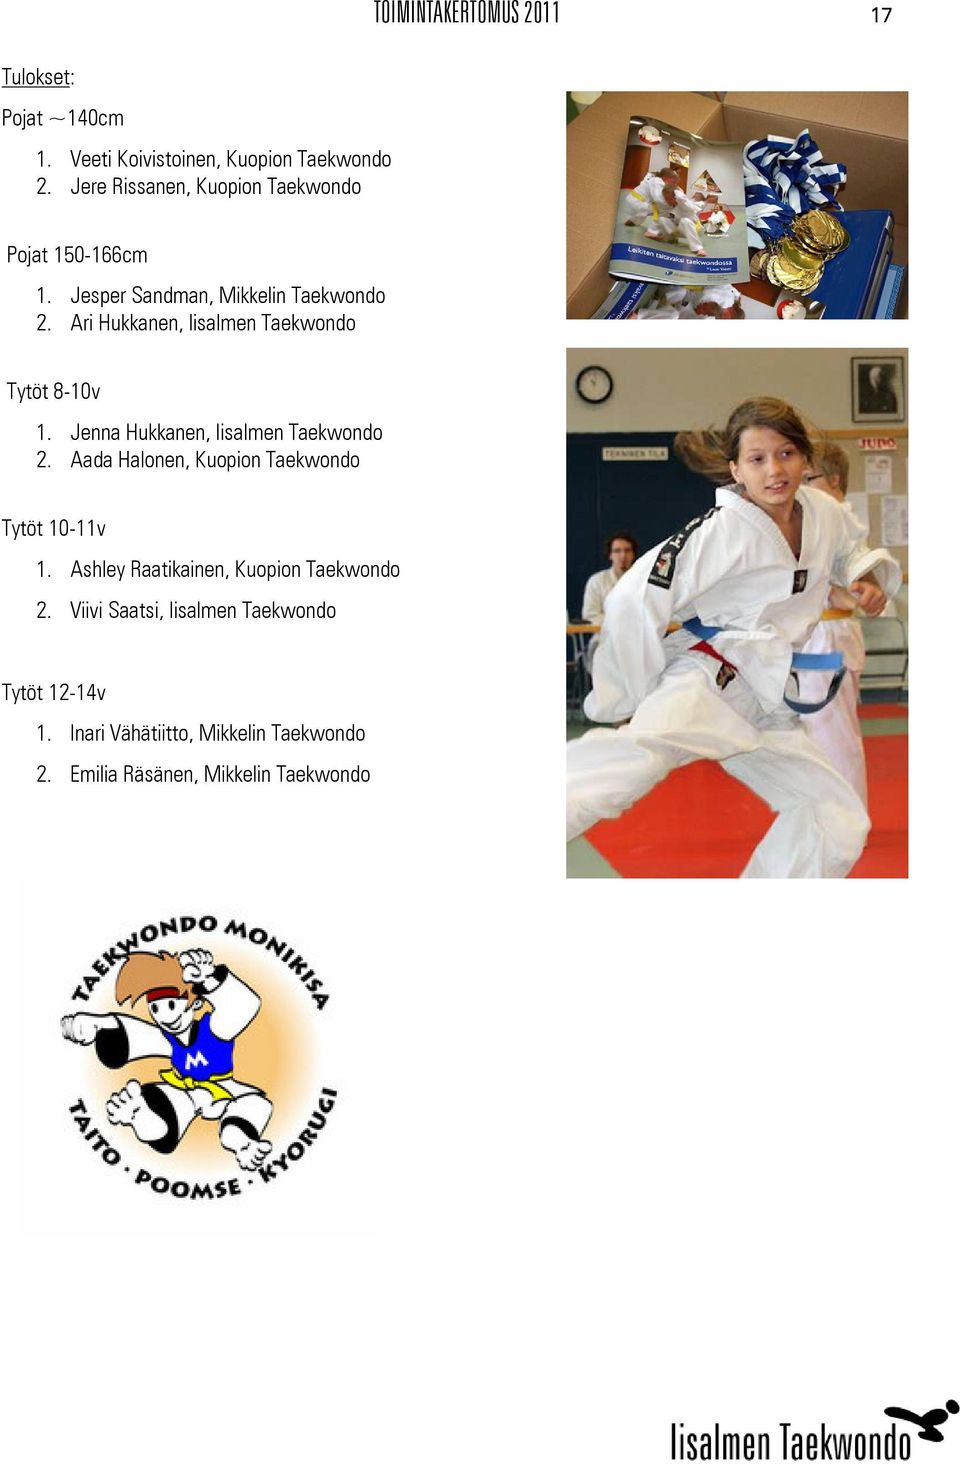 Ari Hukkanen, Iisalmen Taekwondo Tytöt 8-10v 1. Jenna Hukkanen, Iisalmen Taekwondo 2.